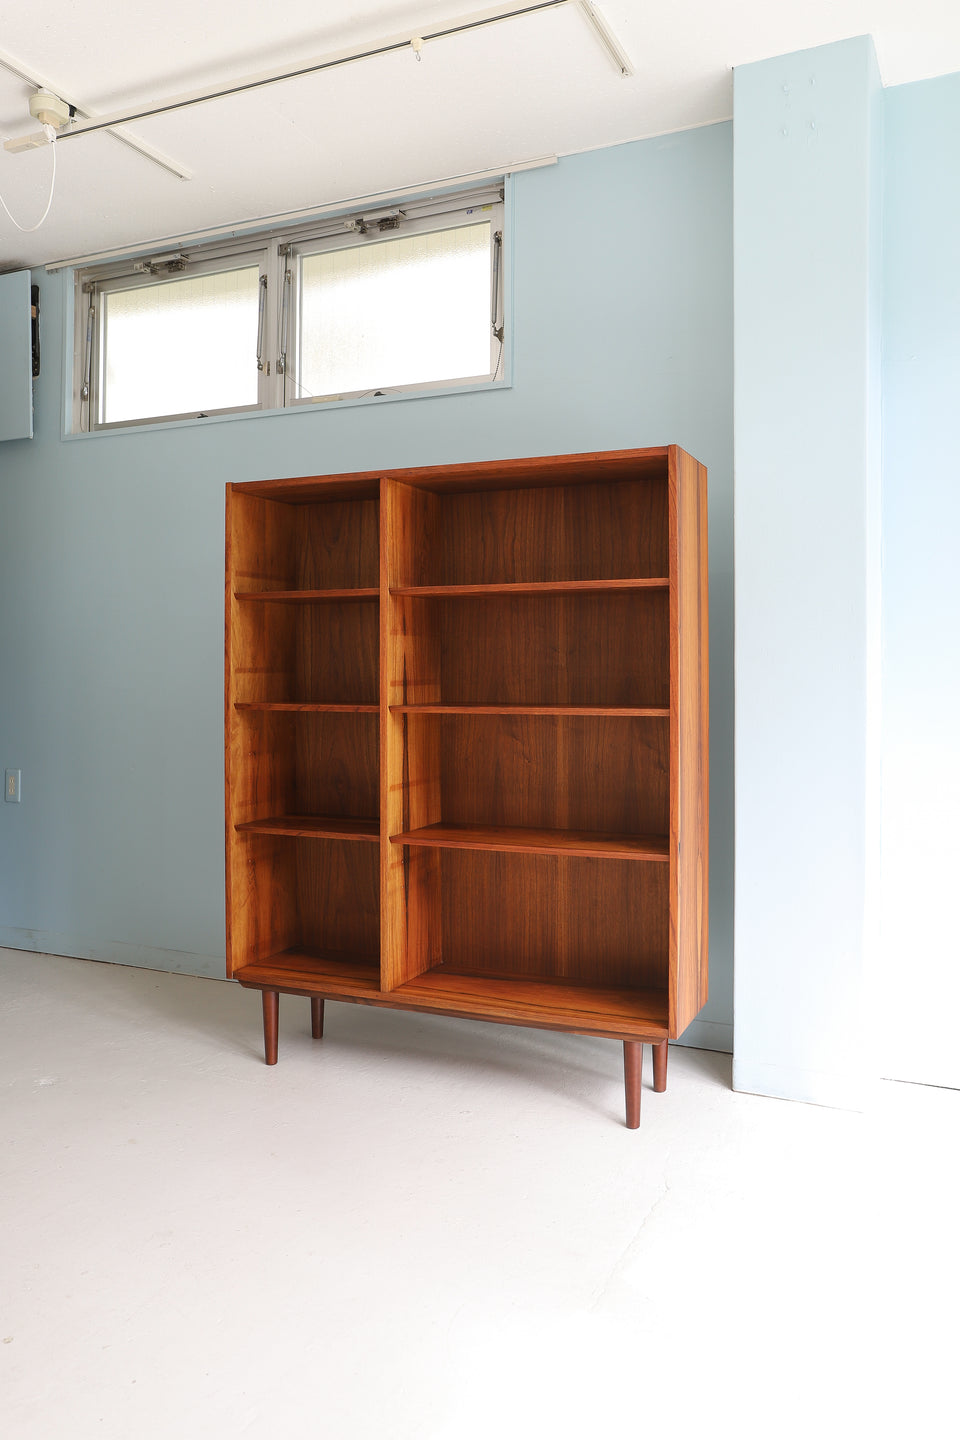 Rosewood Bookcase Shelf Danish Vintage/デンマークヴィンテージ ブックケース シェルフ 本棚 ローズウッド 北欧家具